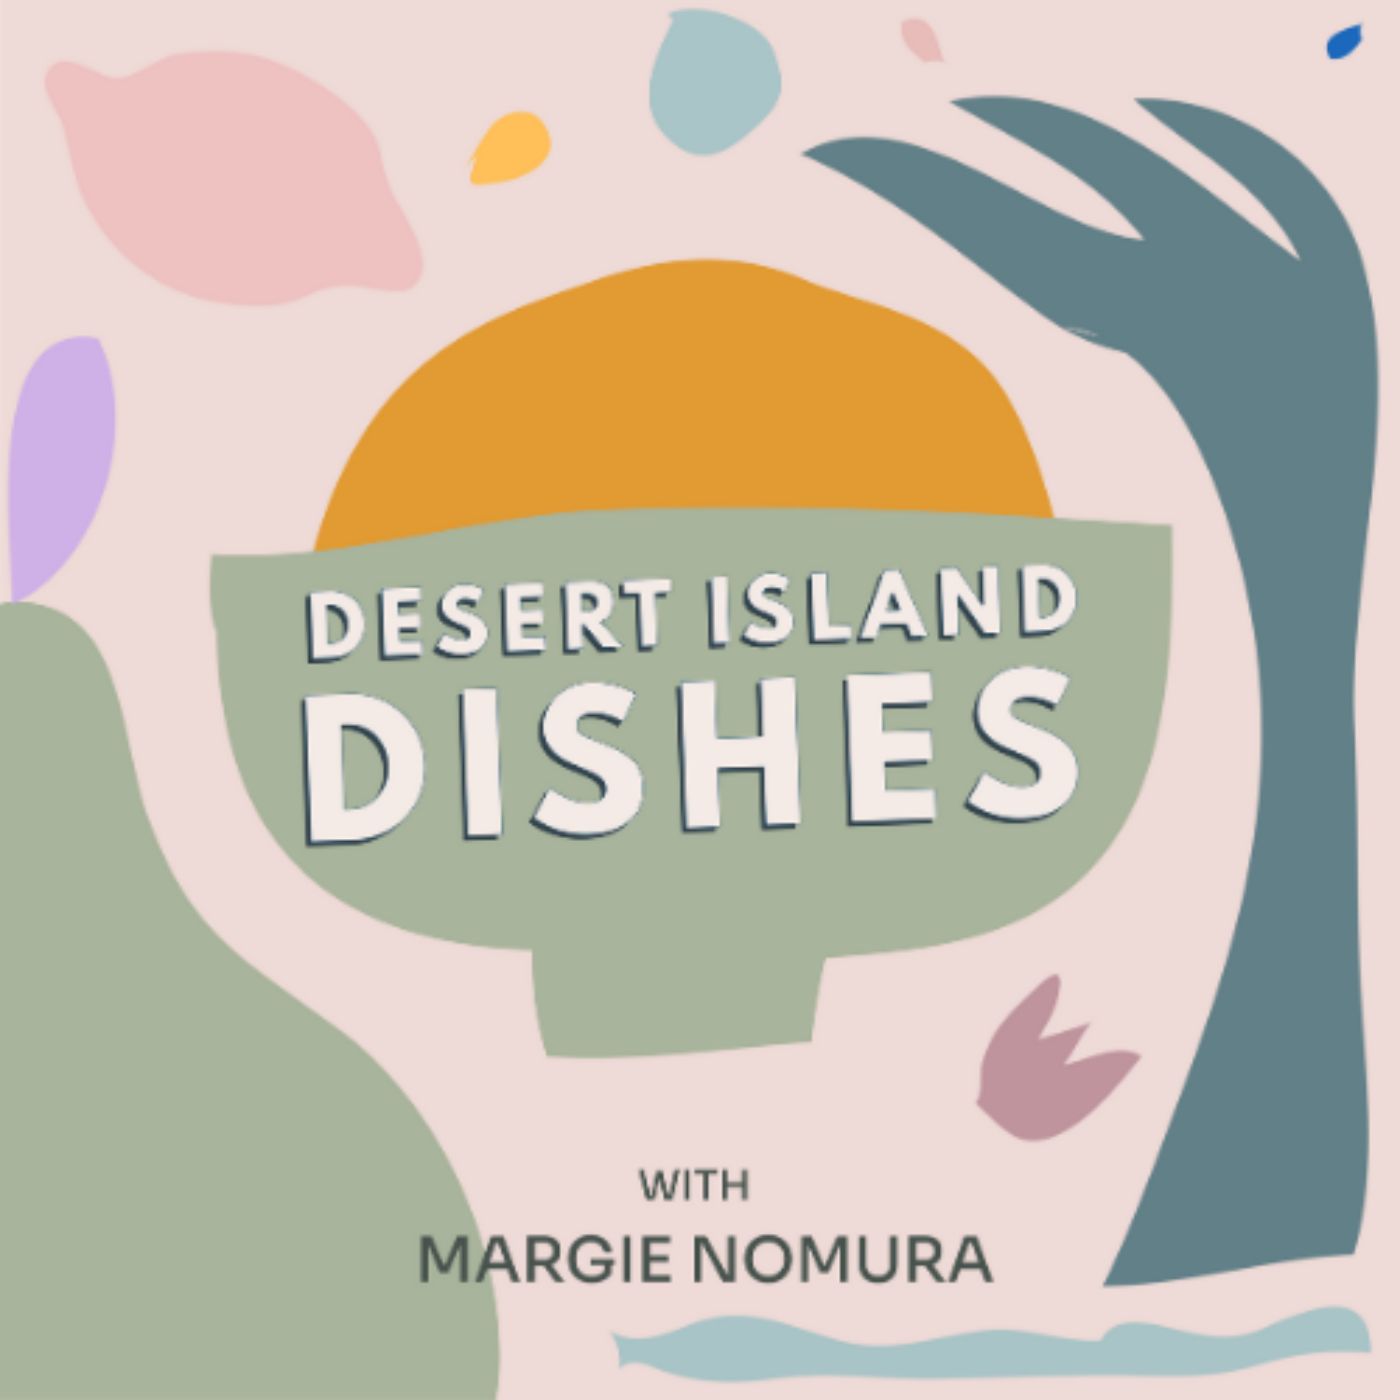 Desert Island Dishes podcast show image